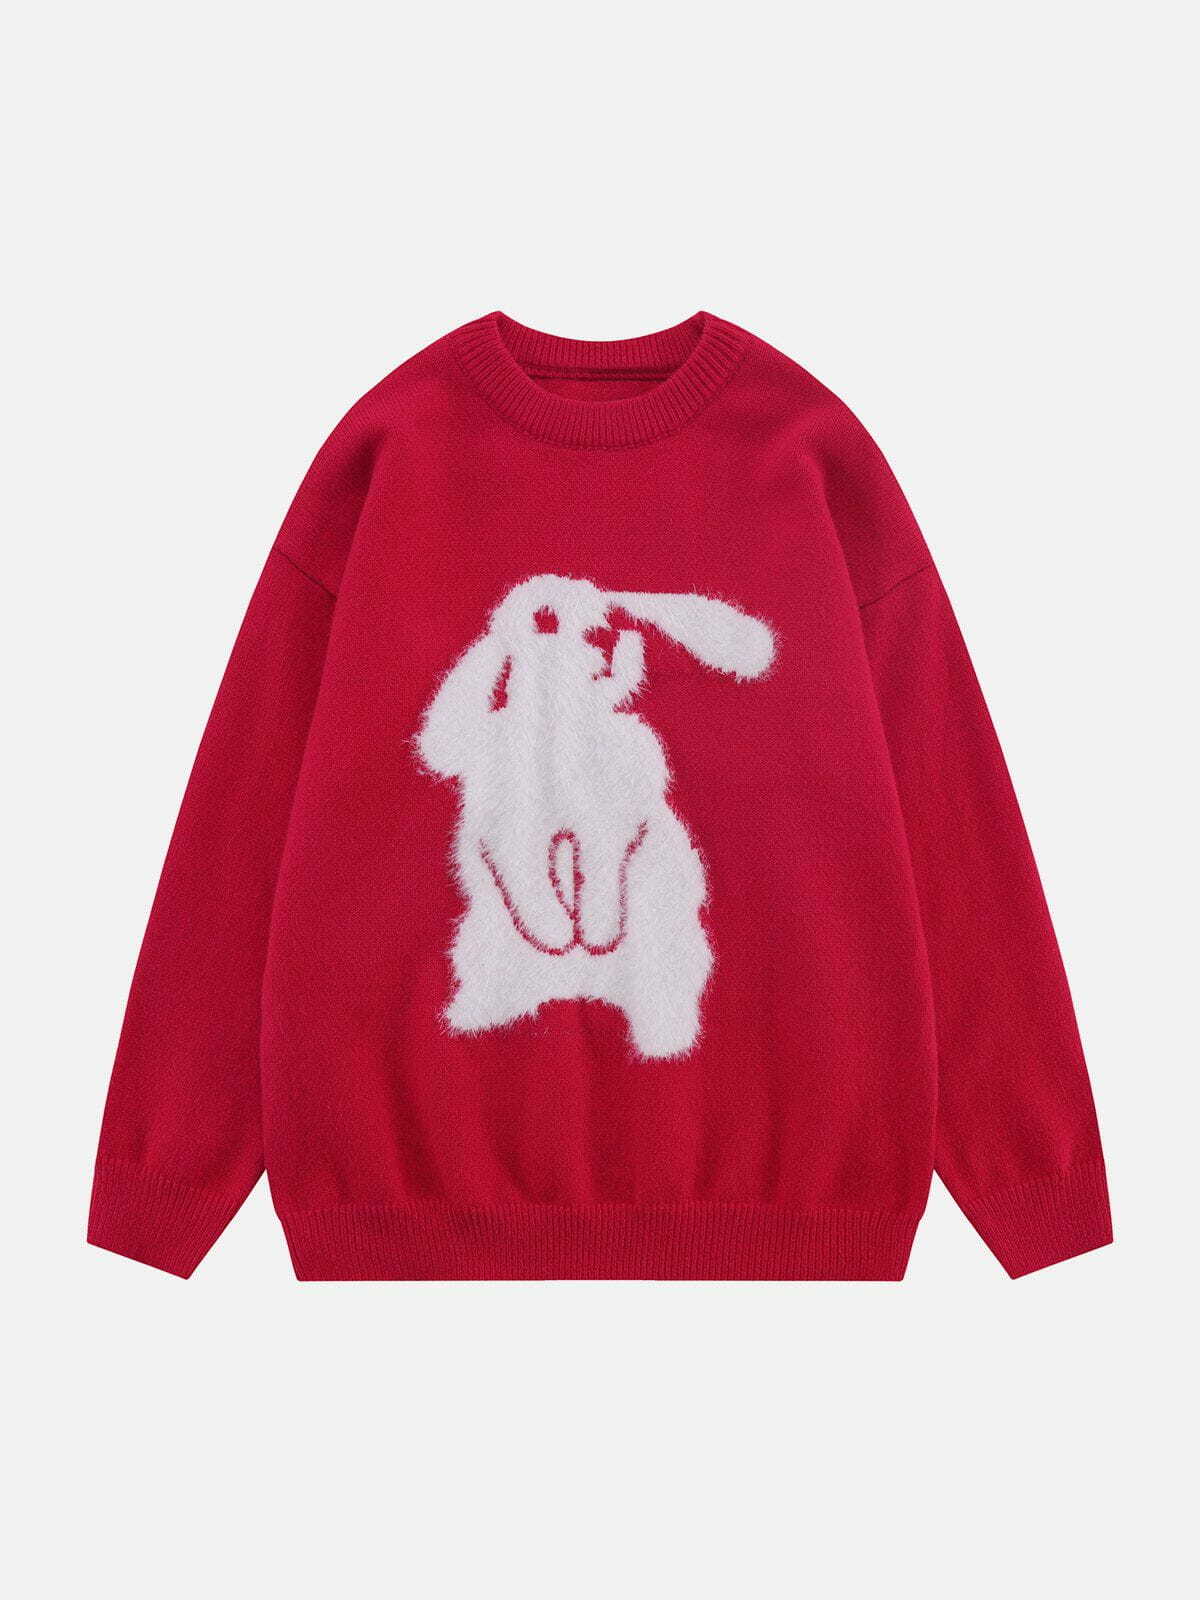 bunny flock print sweater quirky urban fashion 4233